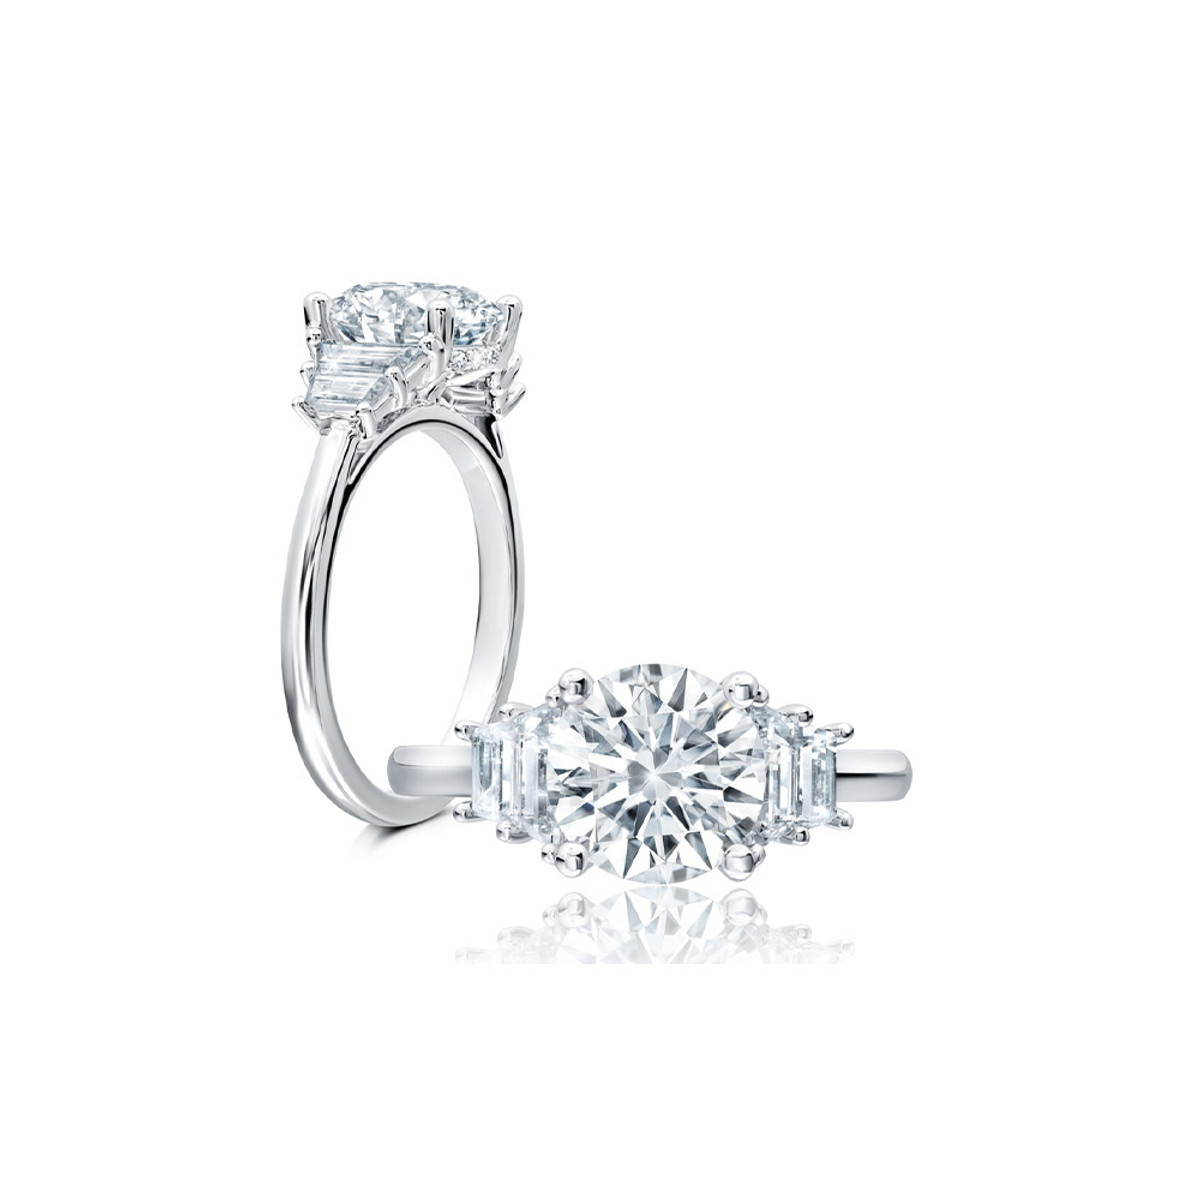 Peter Storm 14K White Gold Diamond Semi-Mount Engagement Ring-39110 Product Image